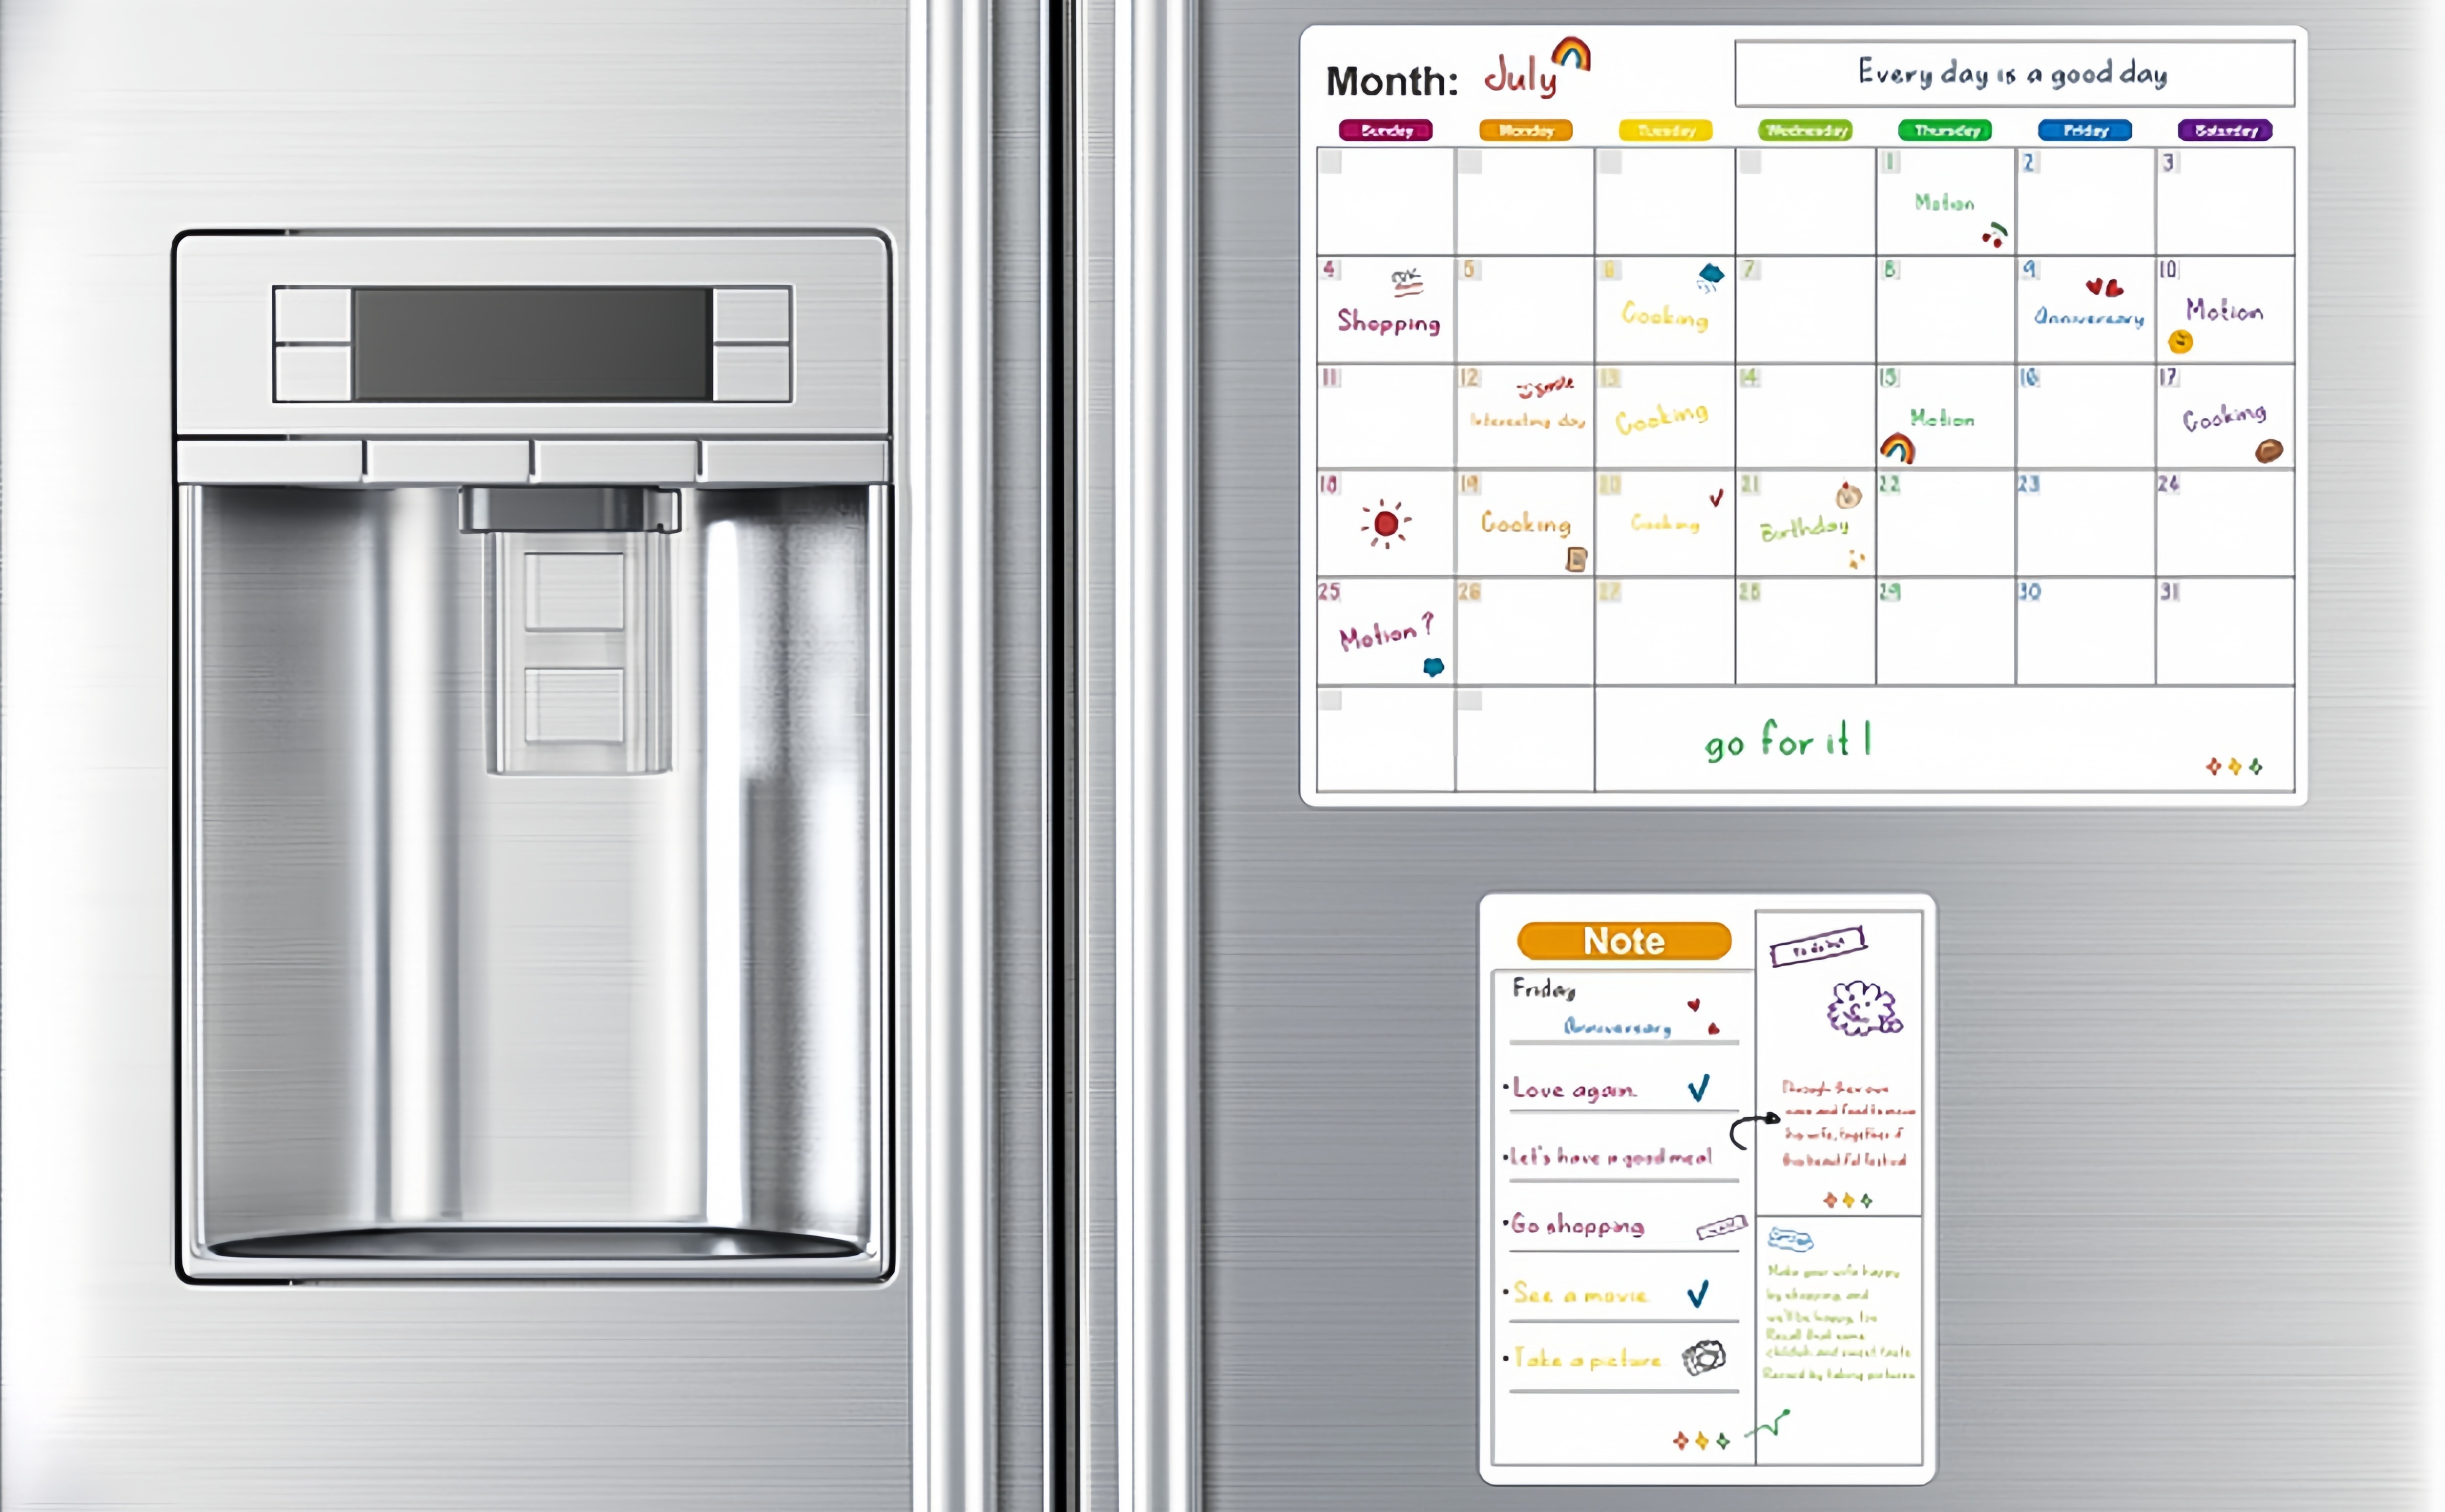 Calendario magnetico per frigorifero, calendario accademico per